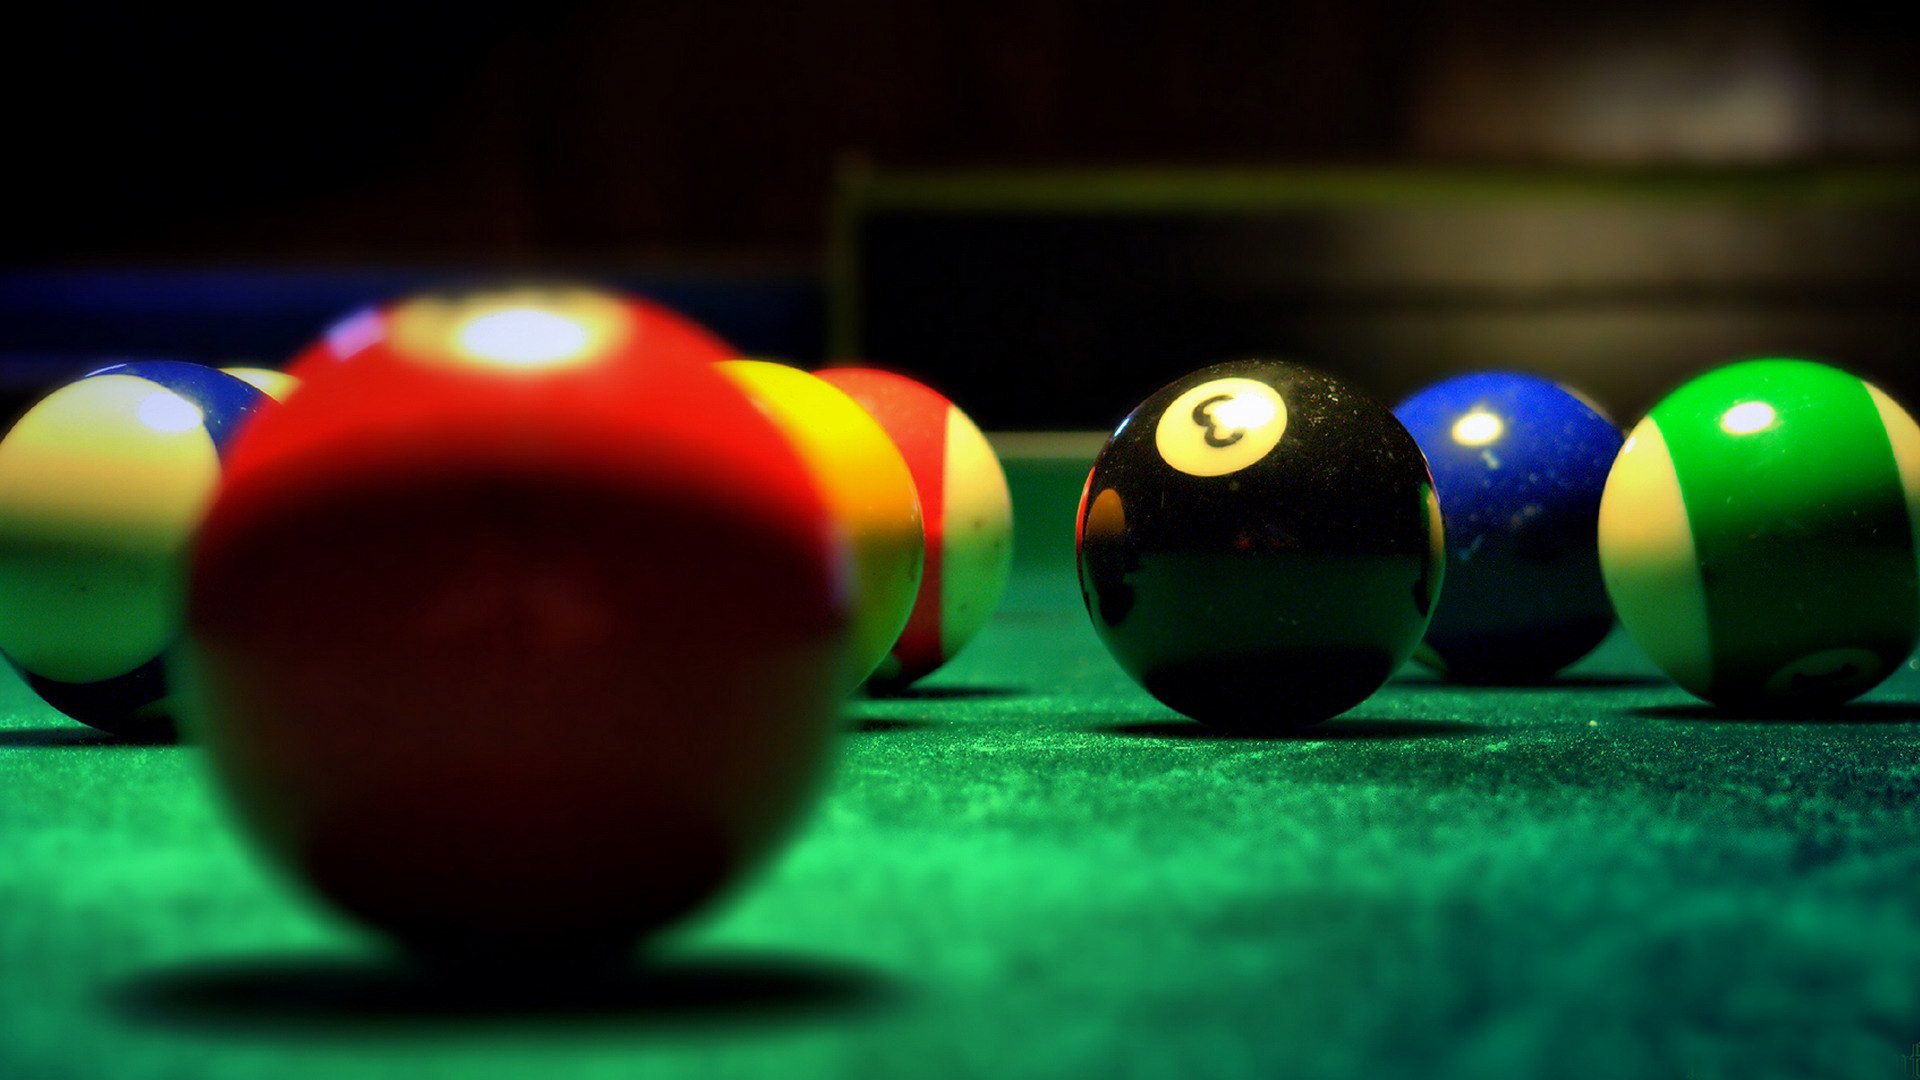 snooker-balls-on-table-wallpaper.jpg (1920×1080)